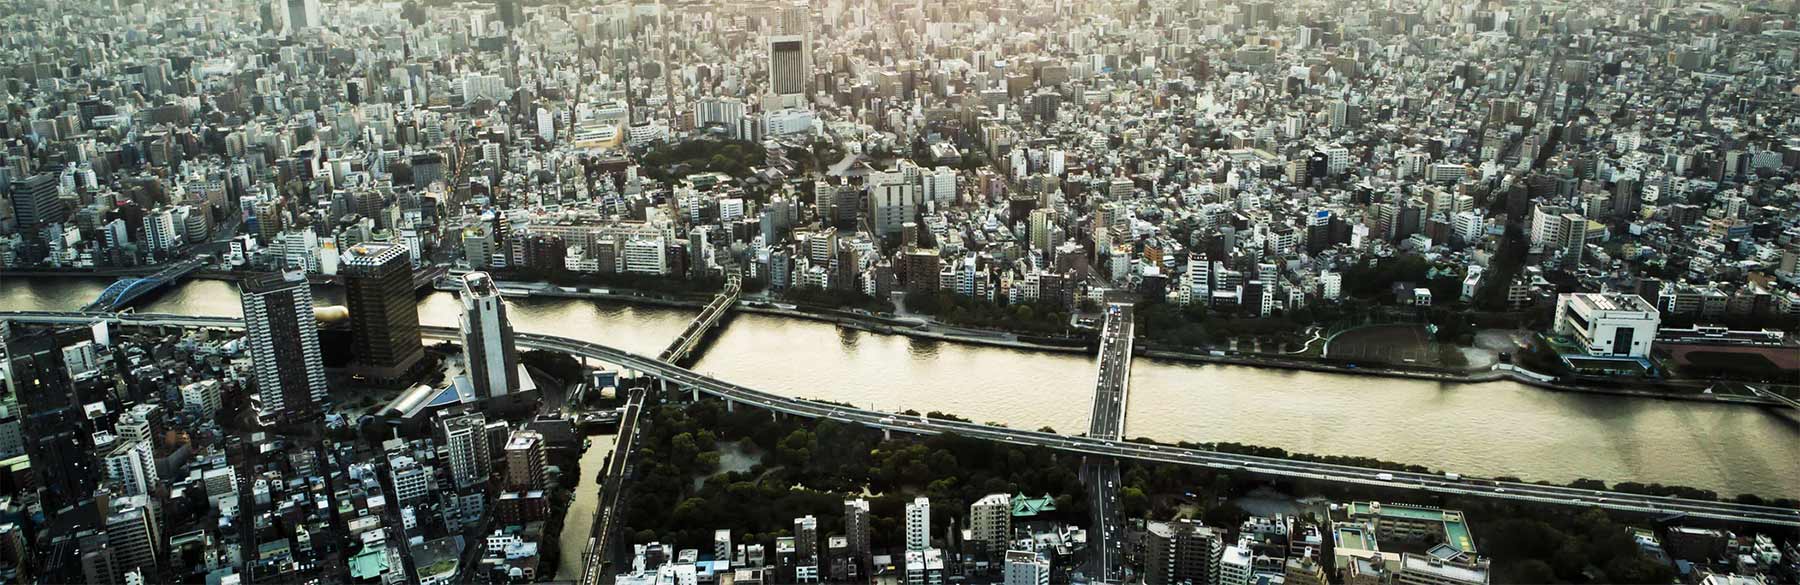 Image of Tokyo, Japan